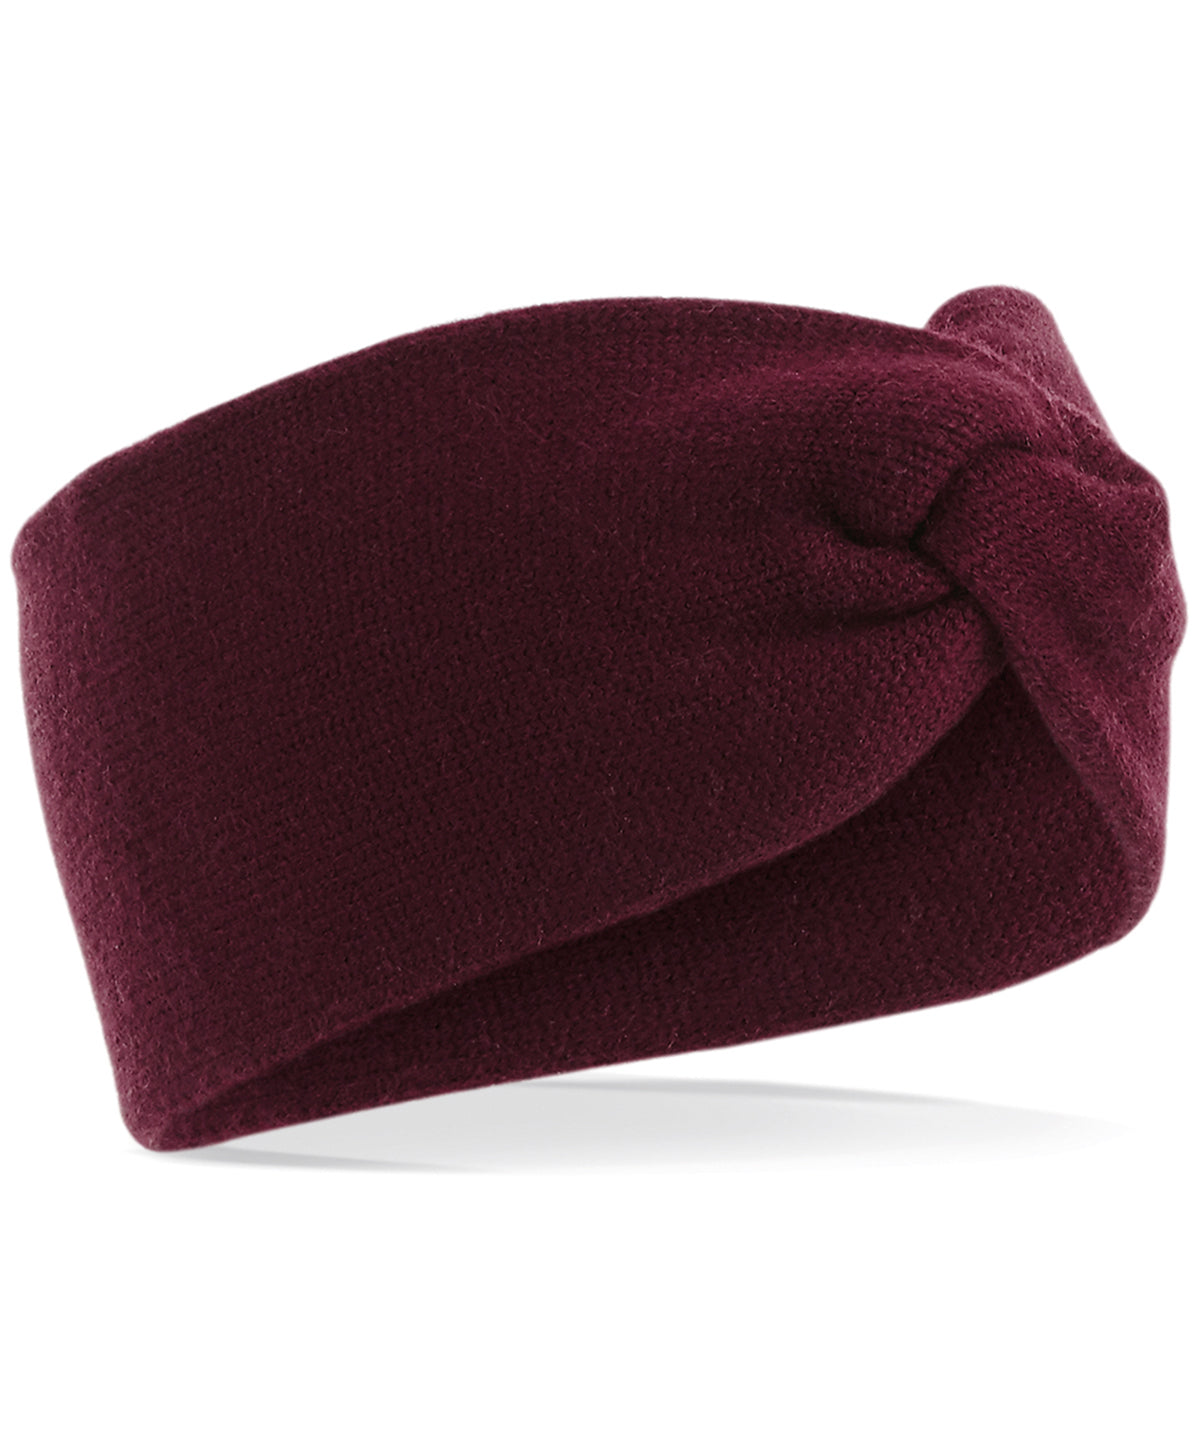 Personalised Headbands - Burgundy Beechfield Twist knit headband